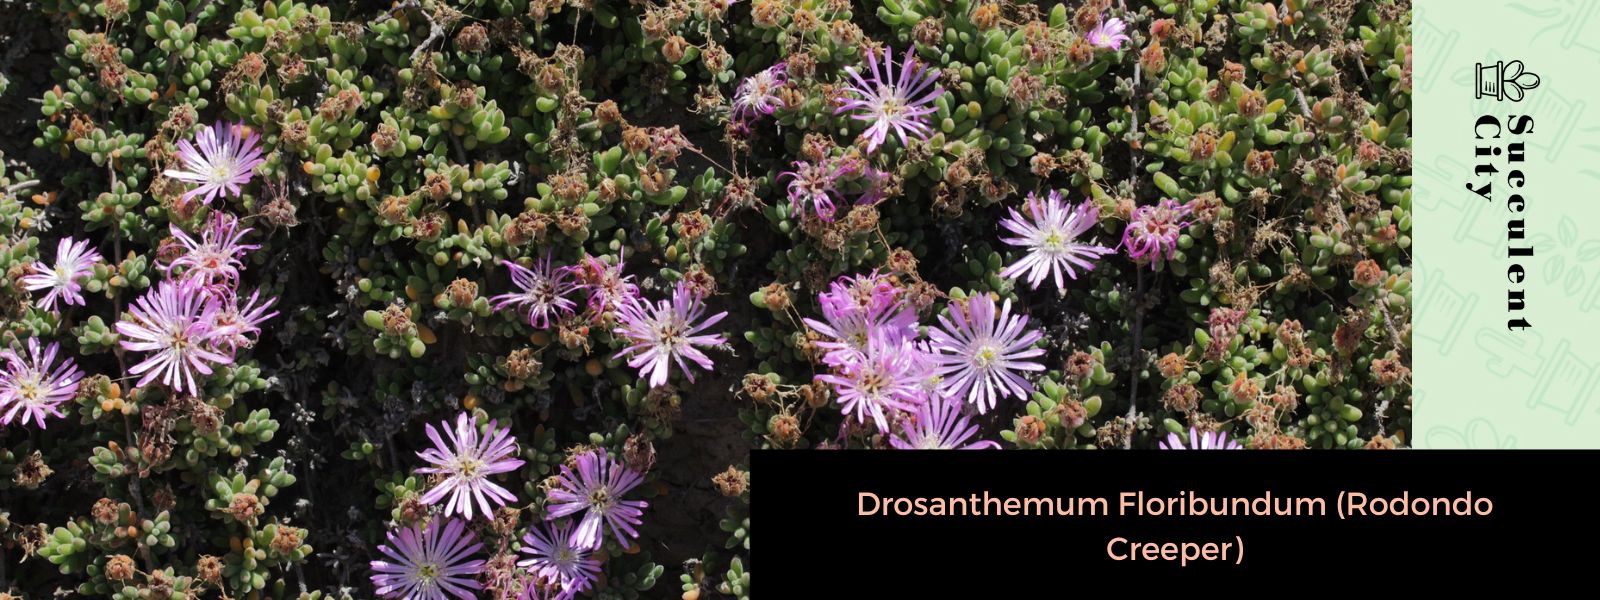 Drosanthemum floribundum (Enredadera de Rodondo)